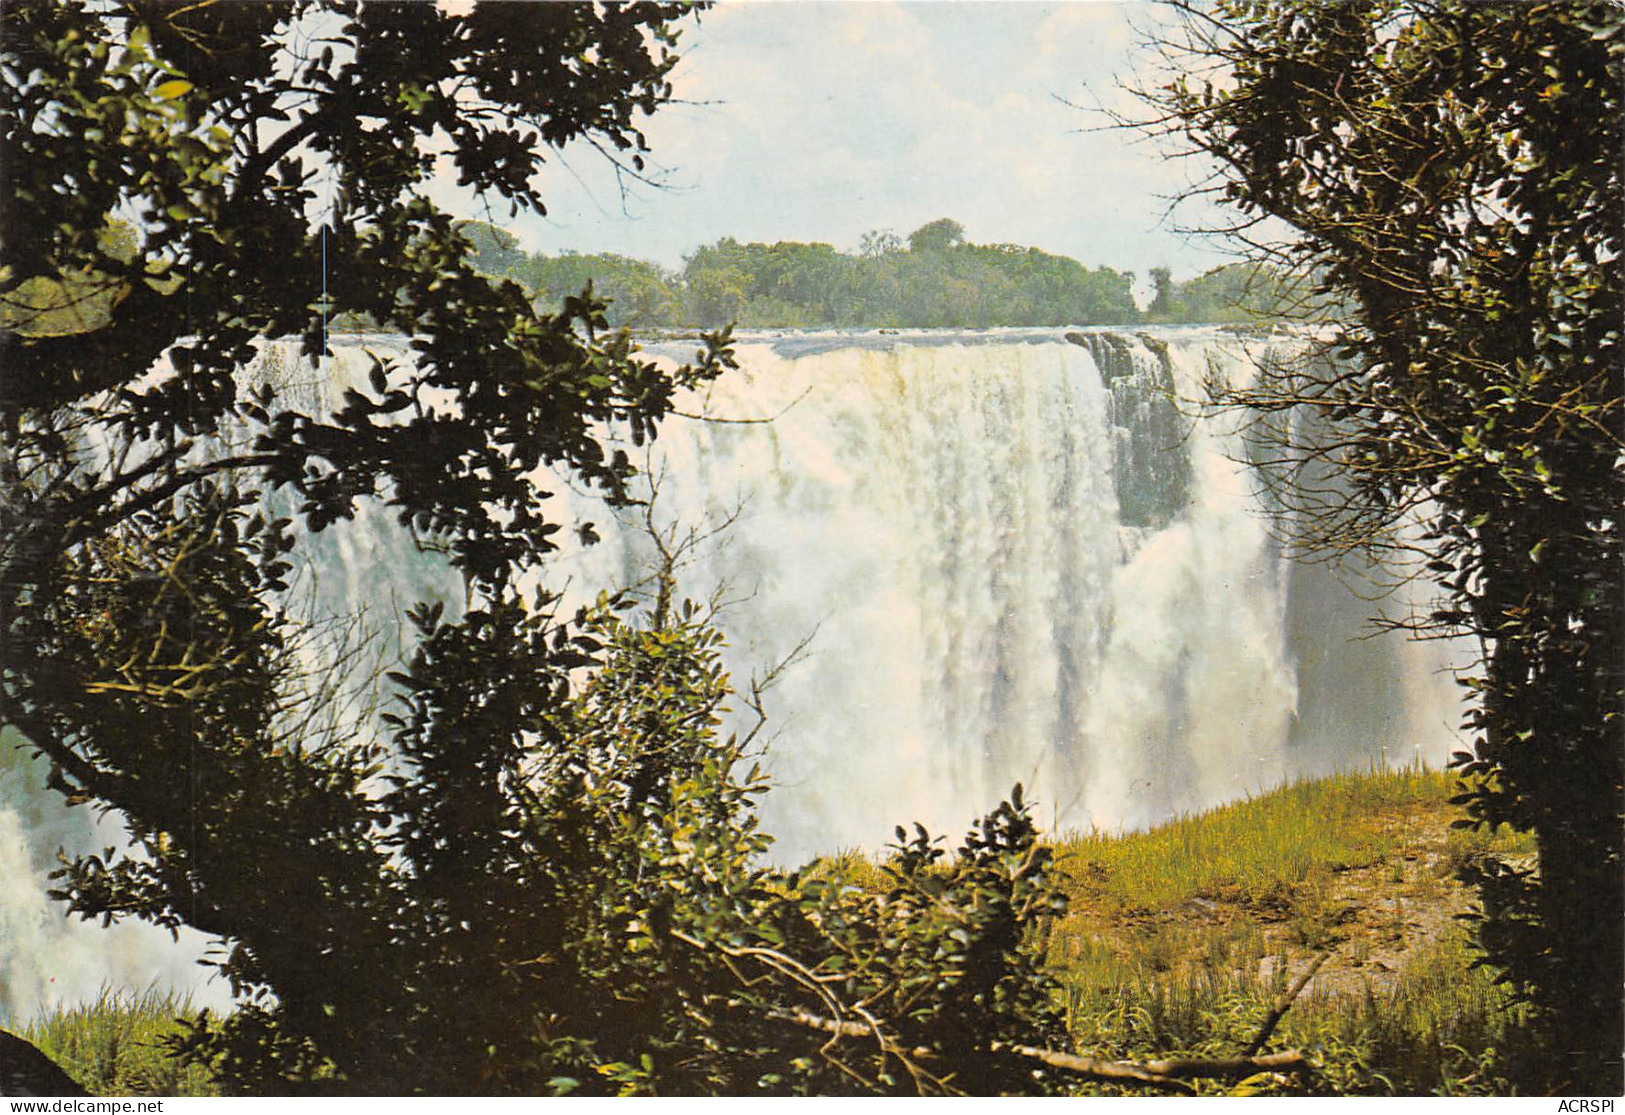 Zimbabwe Rhodesia Main Victoria Falls From Rain Forest Publisher PVT Salisbury HARARE (Scan R/V) N° 37 \MP7117 - Simbabwe